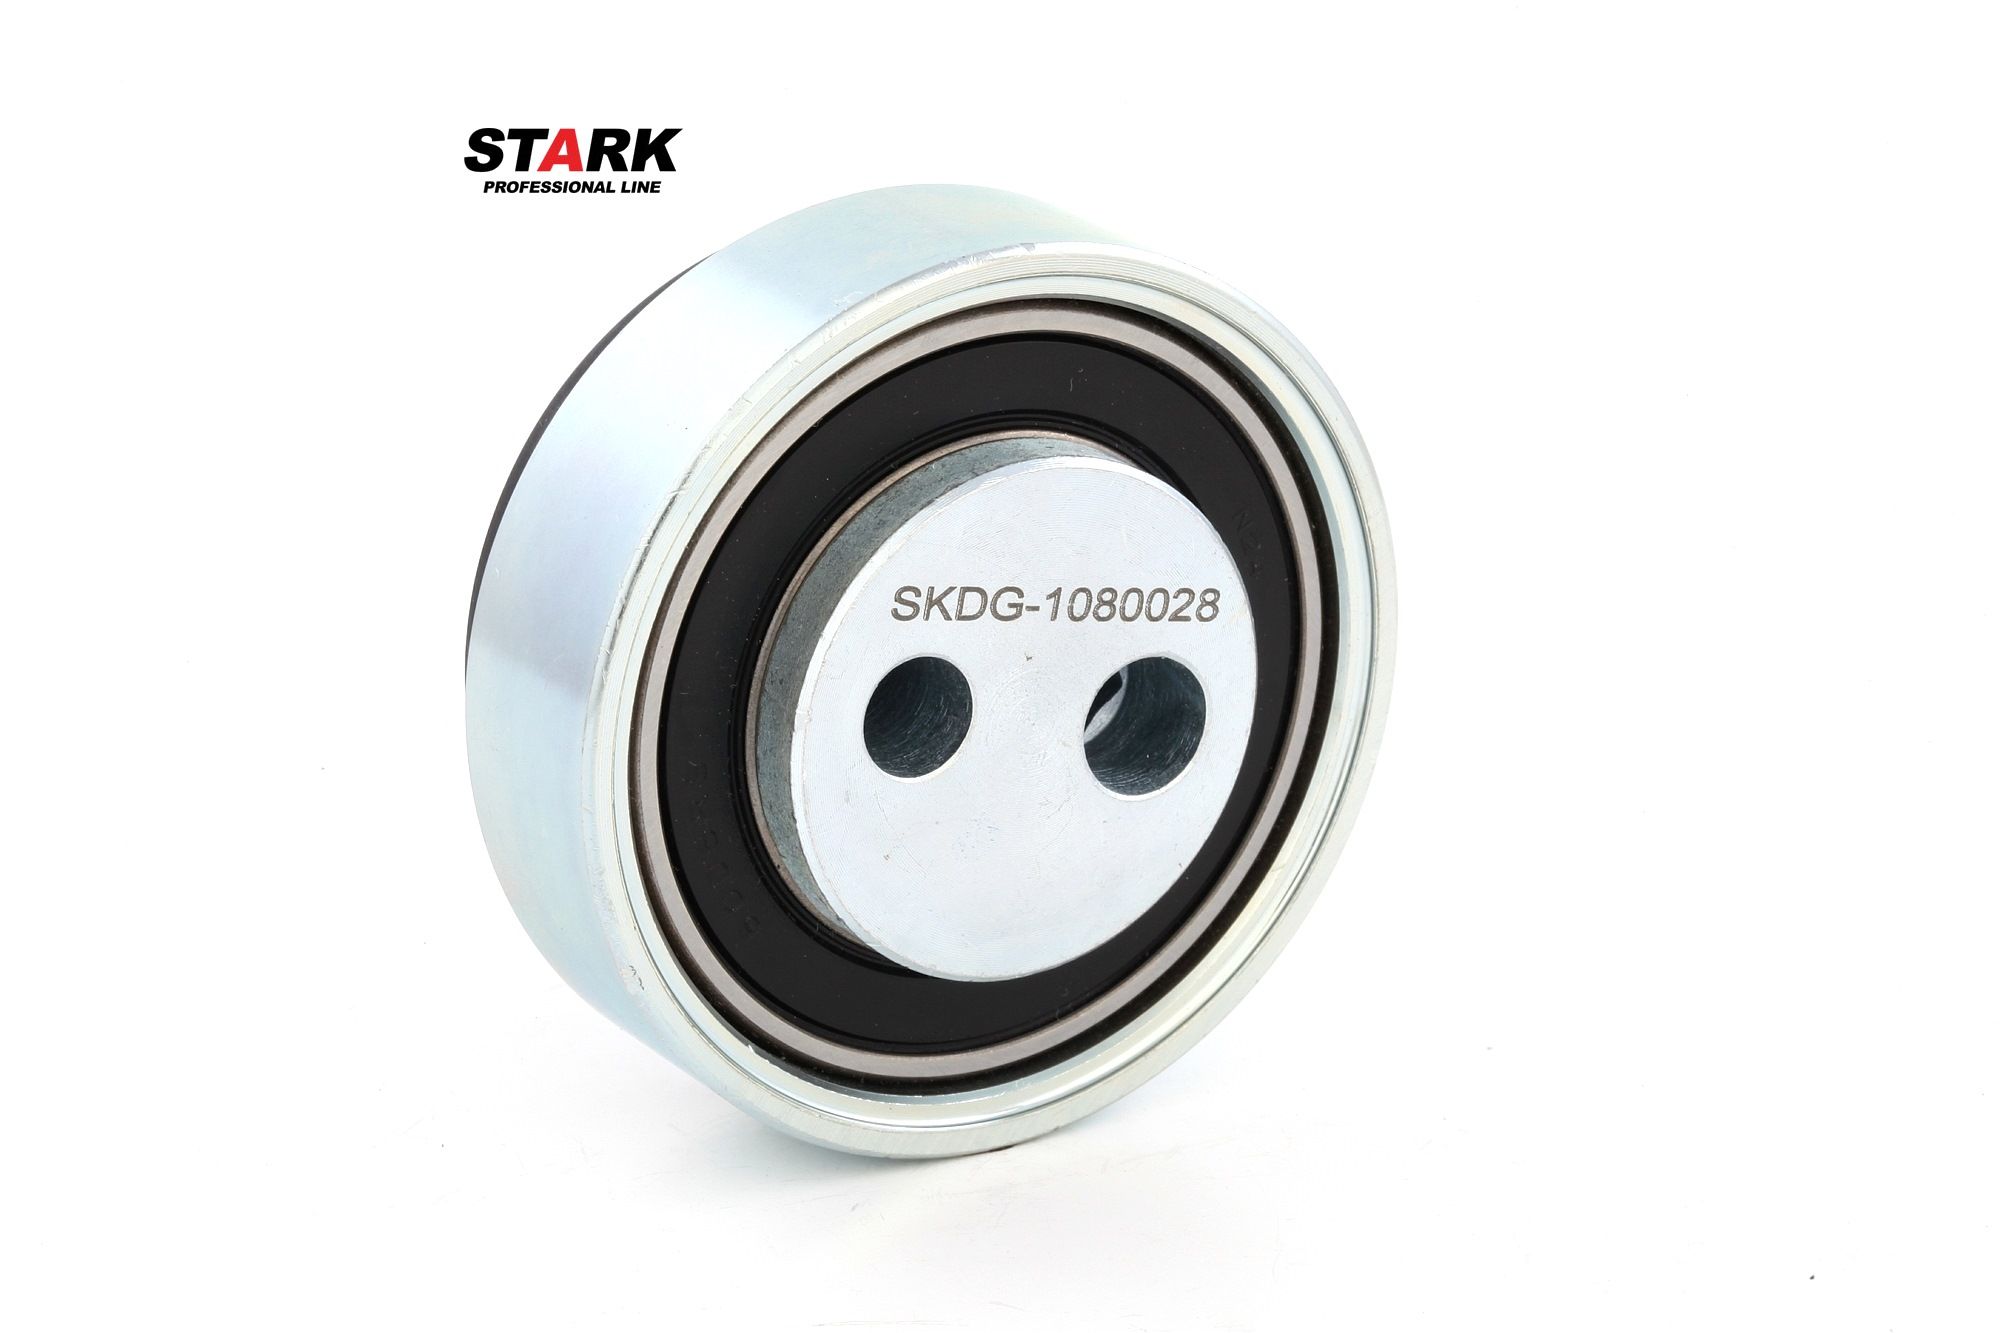 SKDG-1080028 STARK Deflection pulley buy cheap